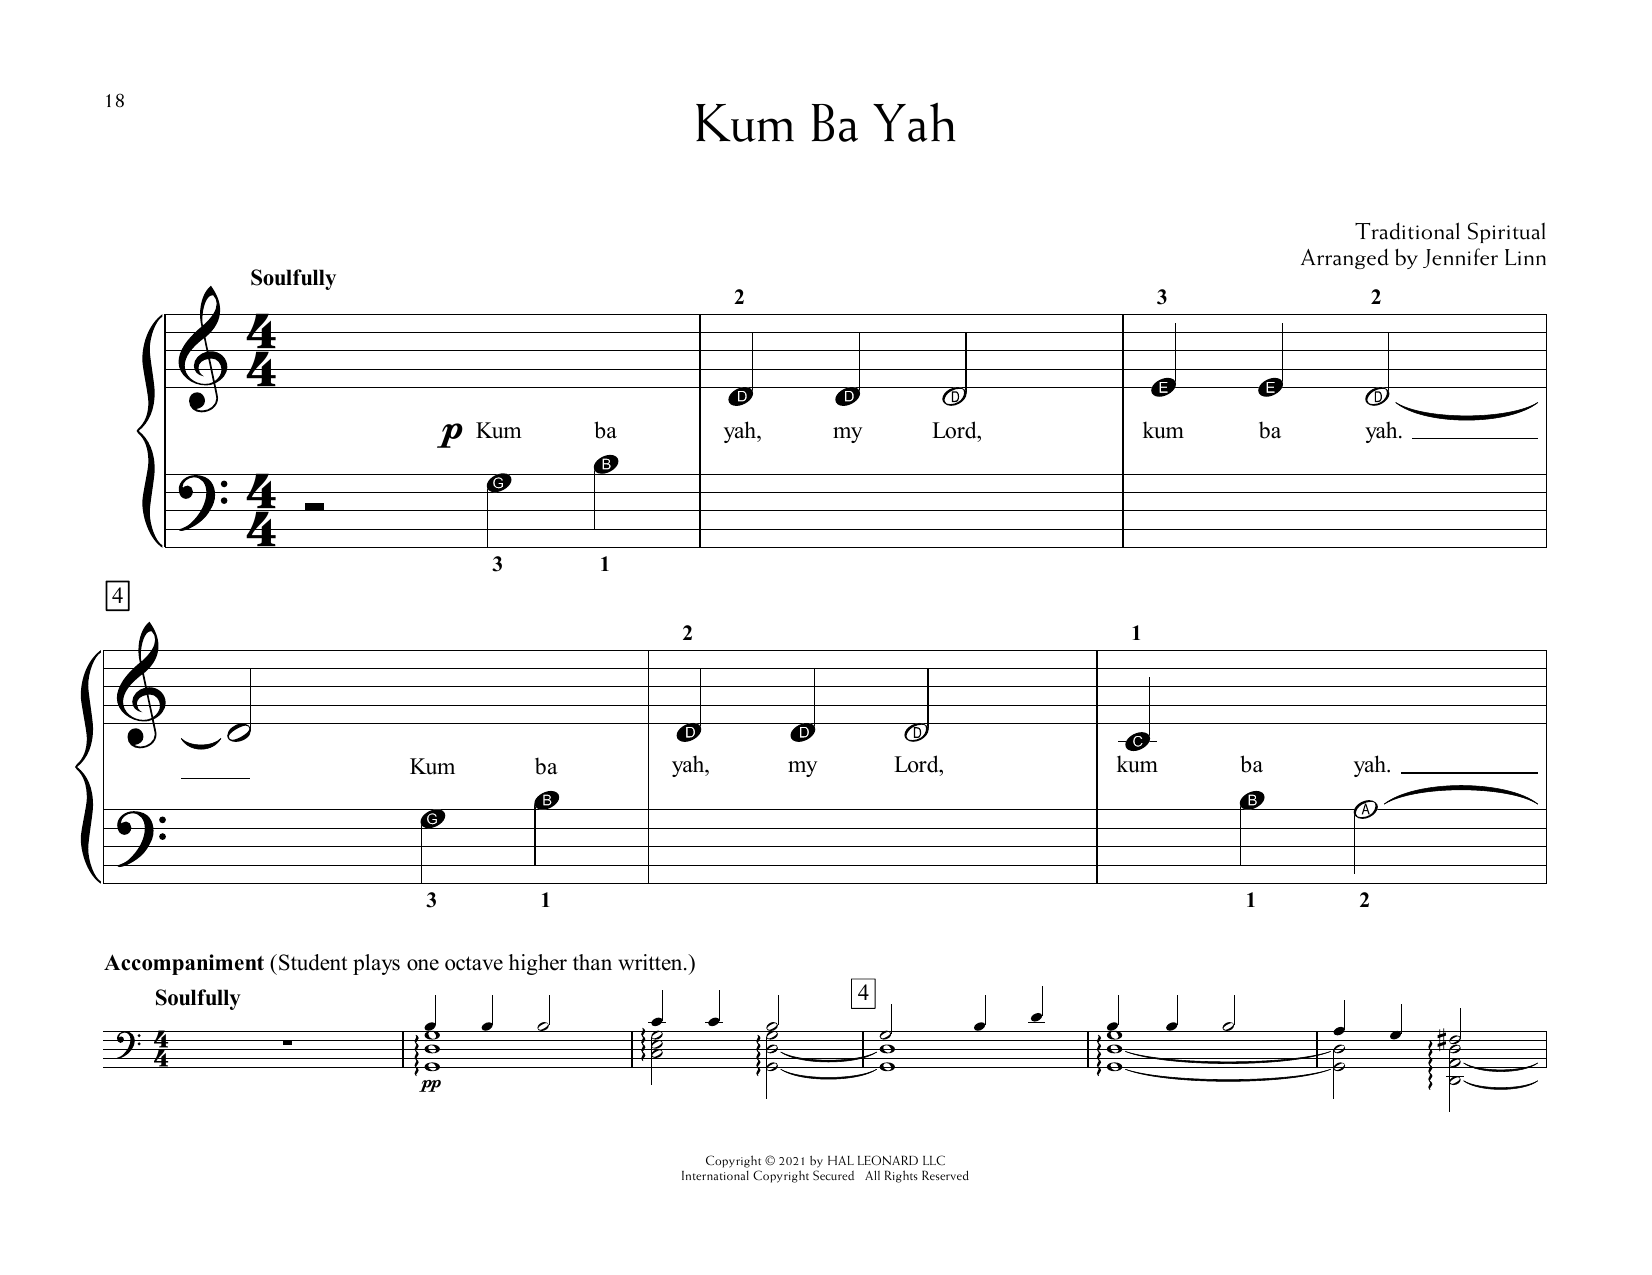 Traditional Spiritual Kum Ba Yah (arr. Jennifer Linn) Sheet Music Notes & Chords for Educational Piano - Download or Print PDF